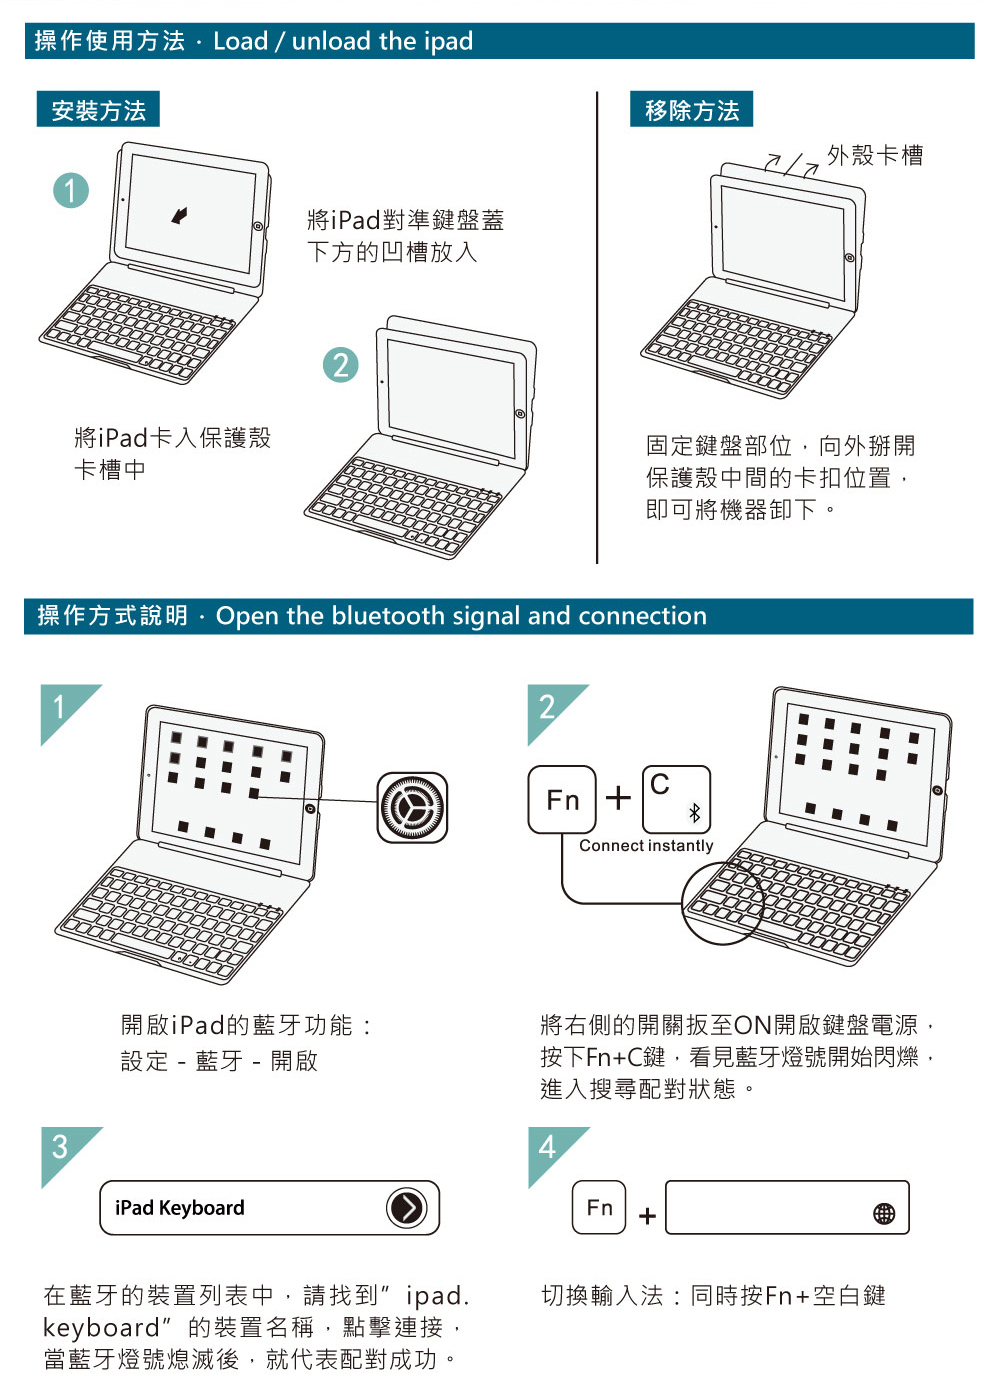 GREENON 鍵盤保護套F13 筆插皮套版 安裝方法 操作說明